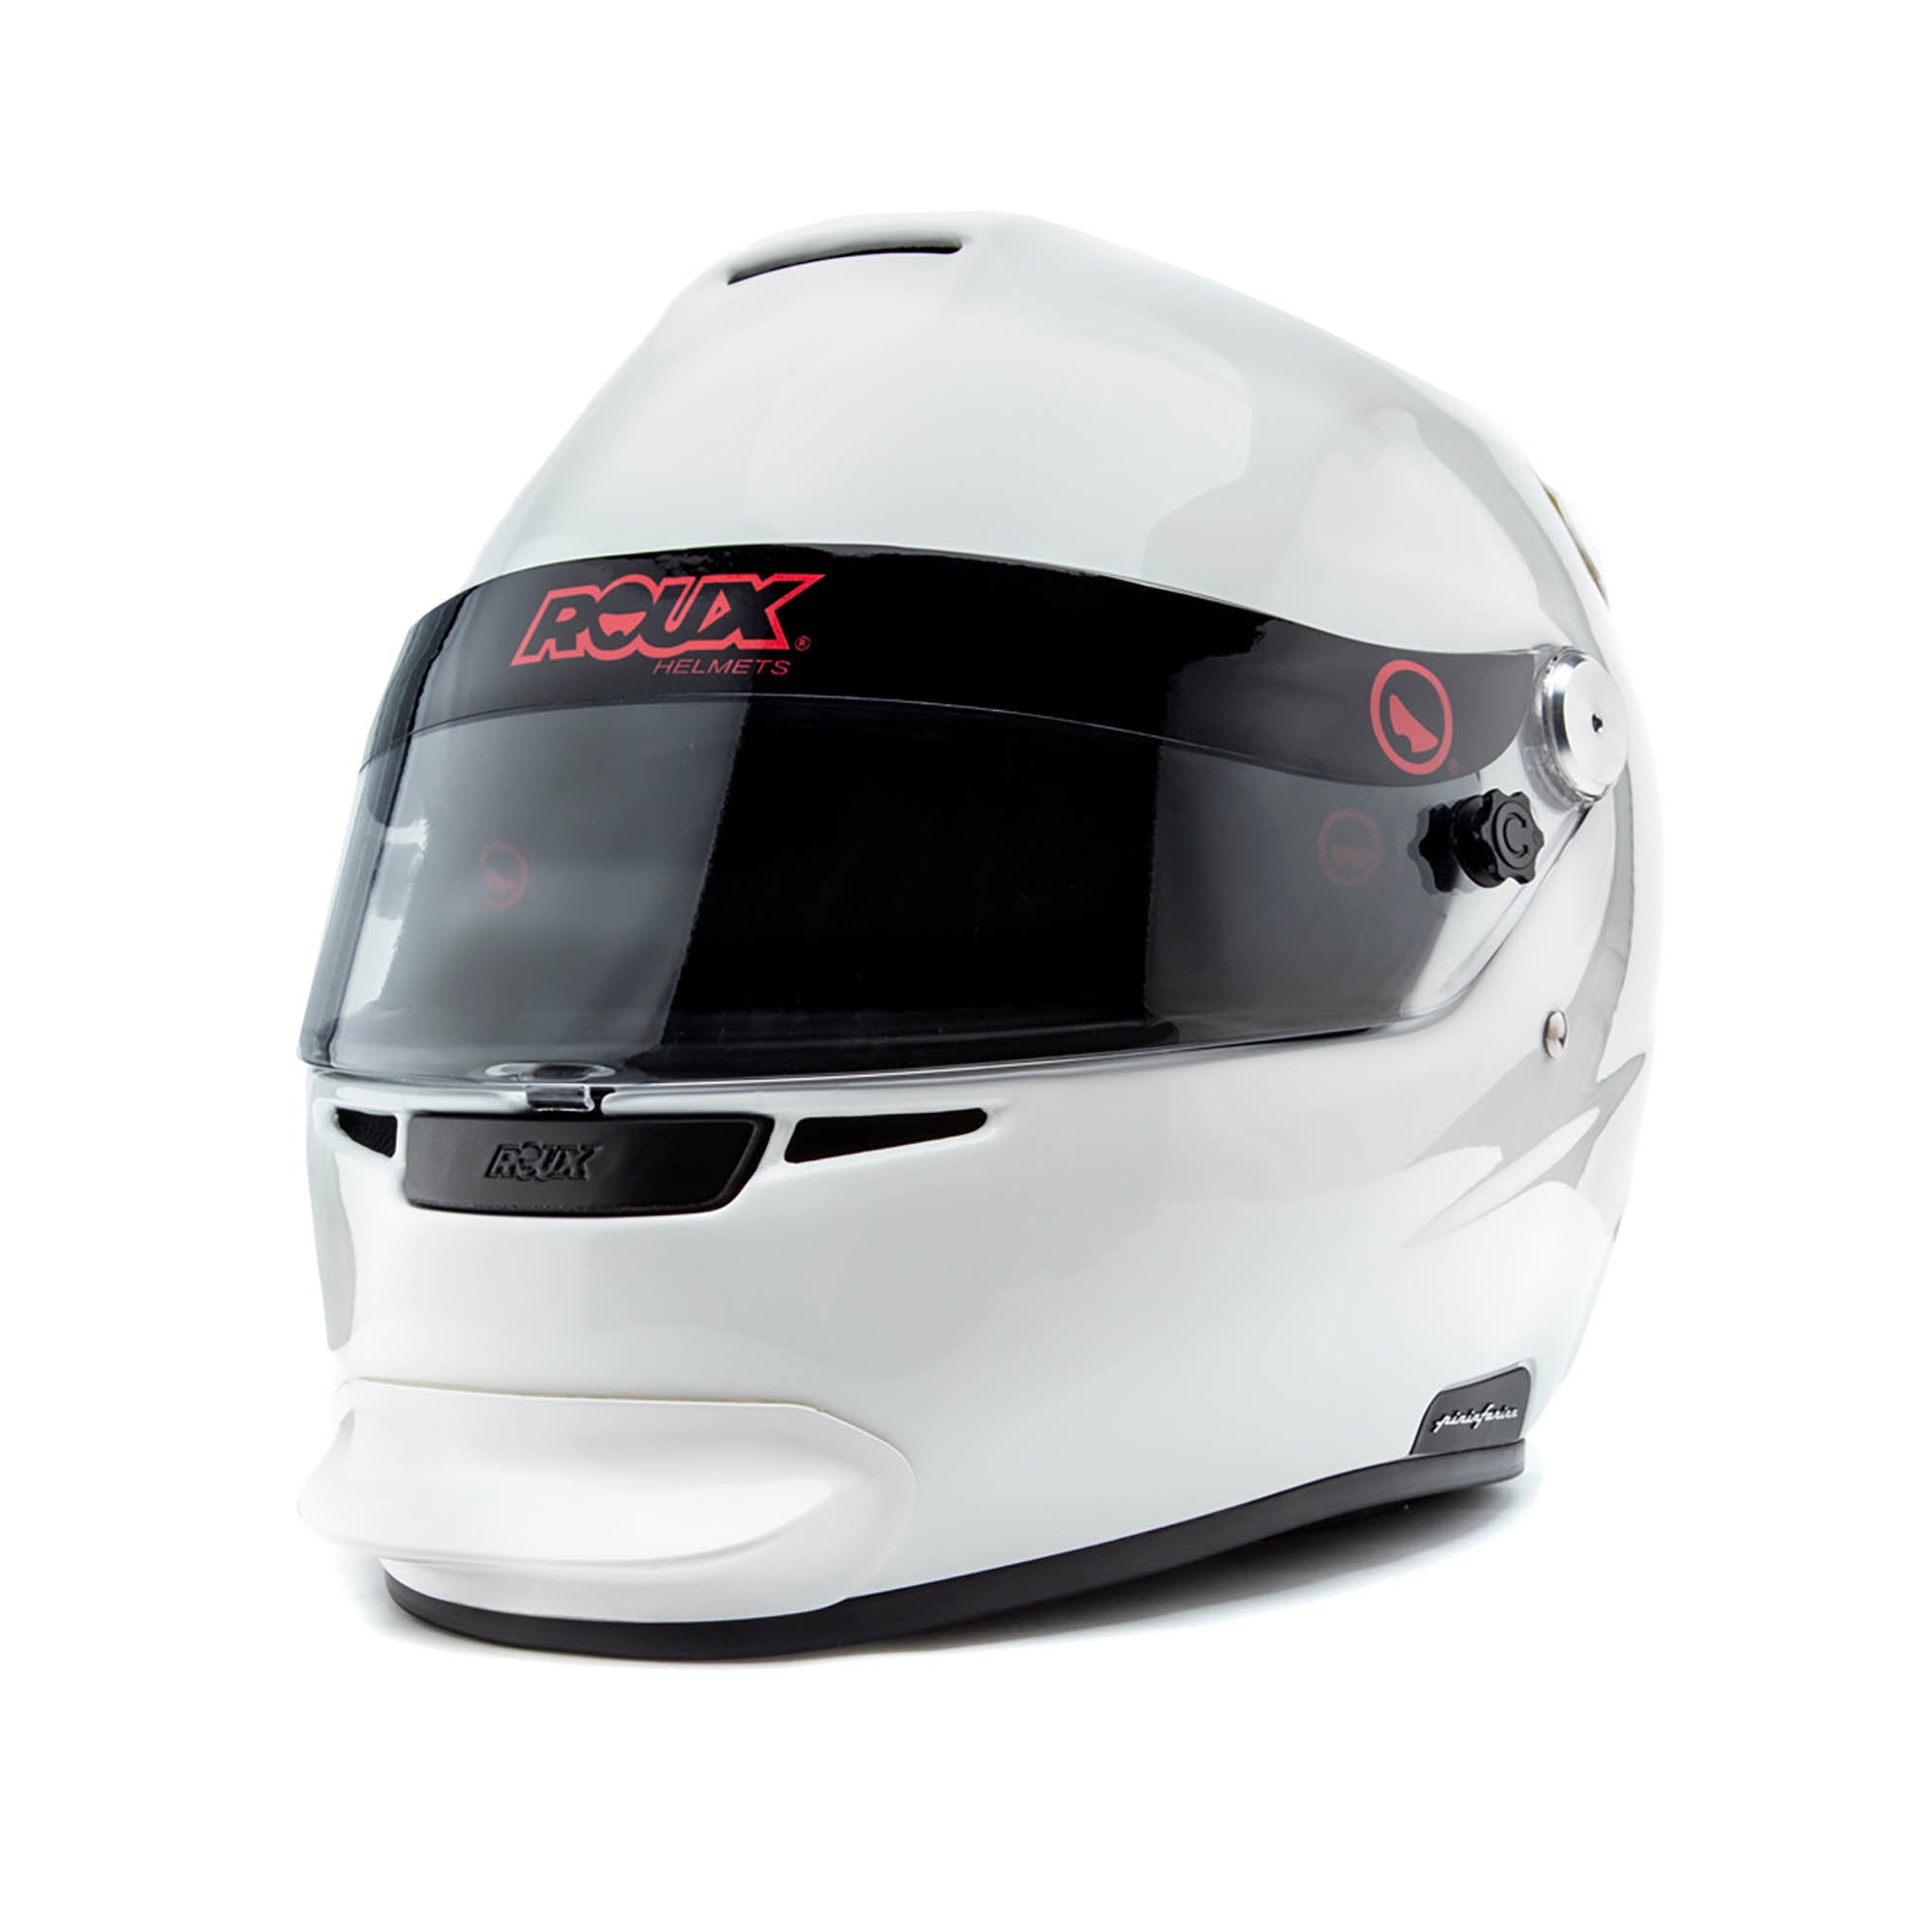 Roux Pininfarina Karting Helmet